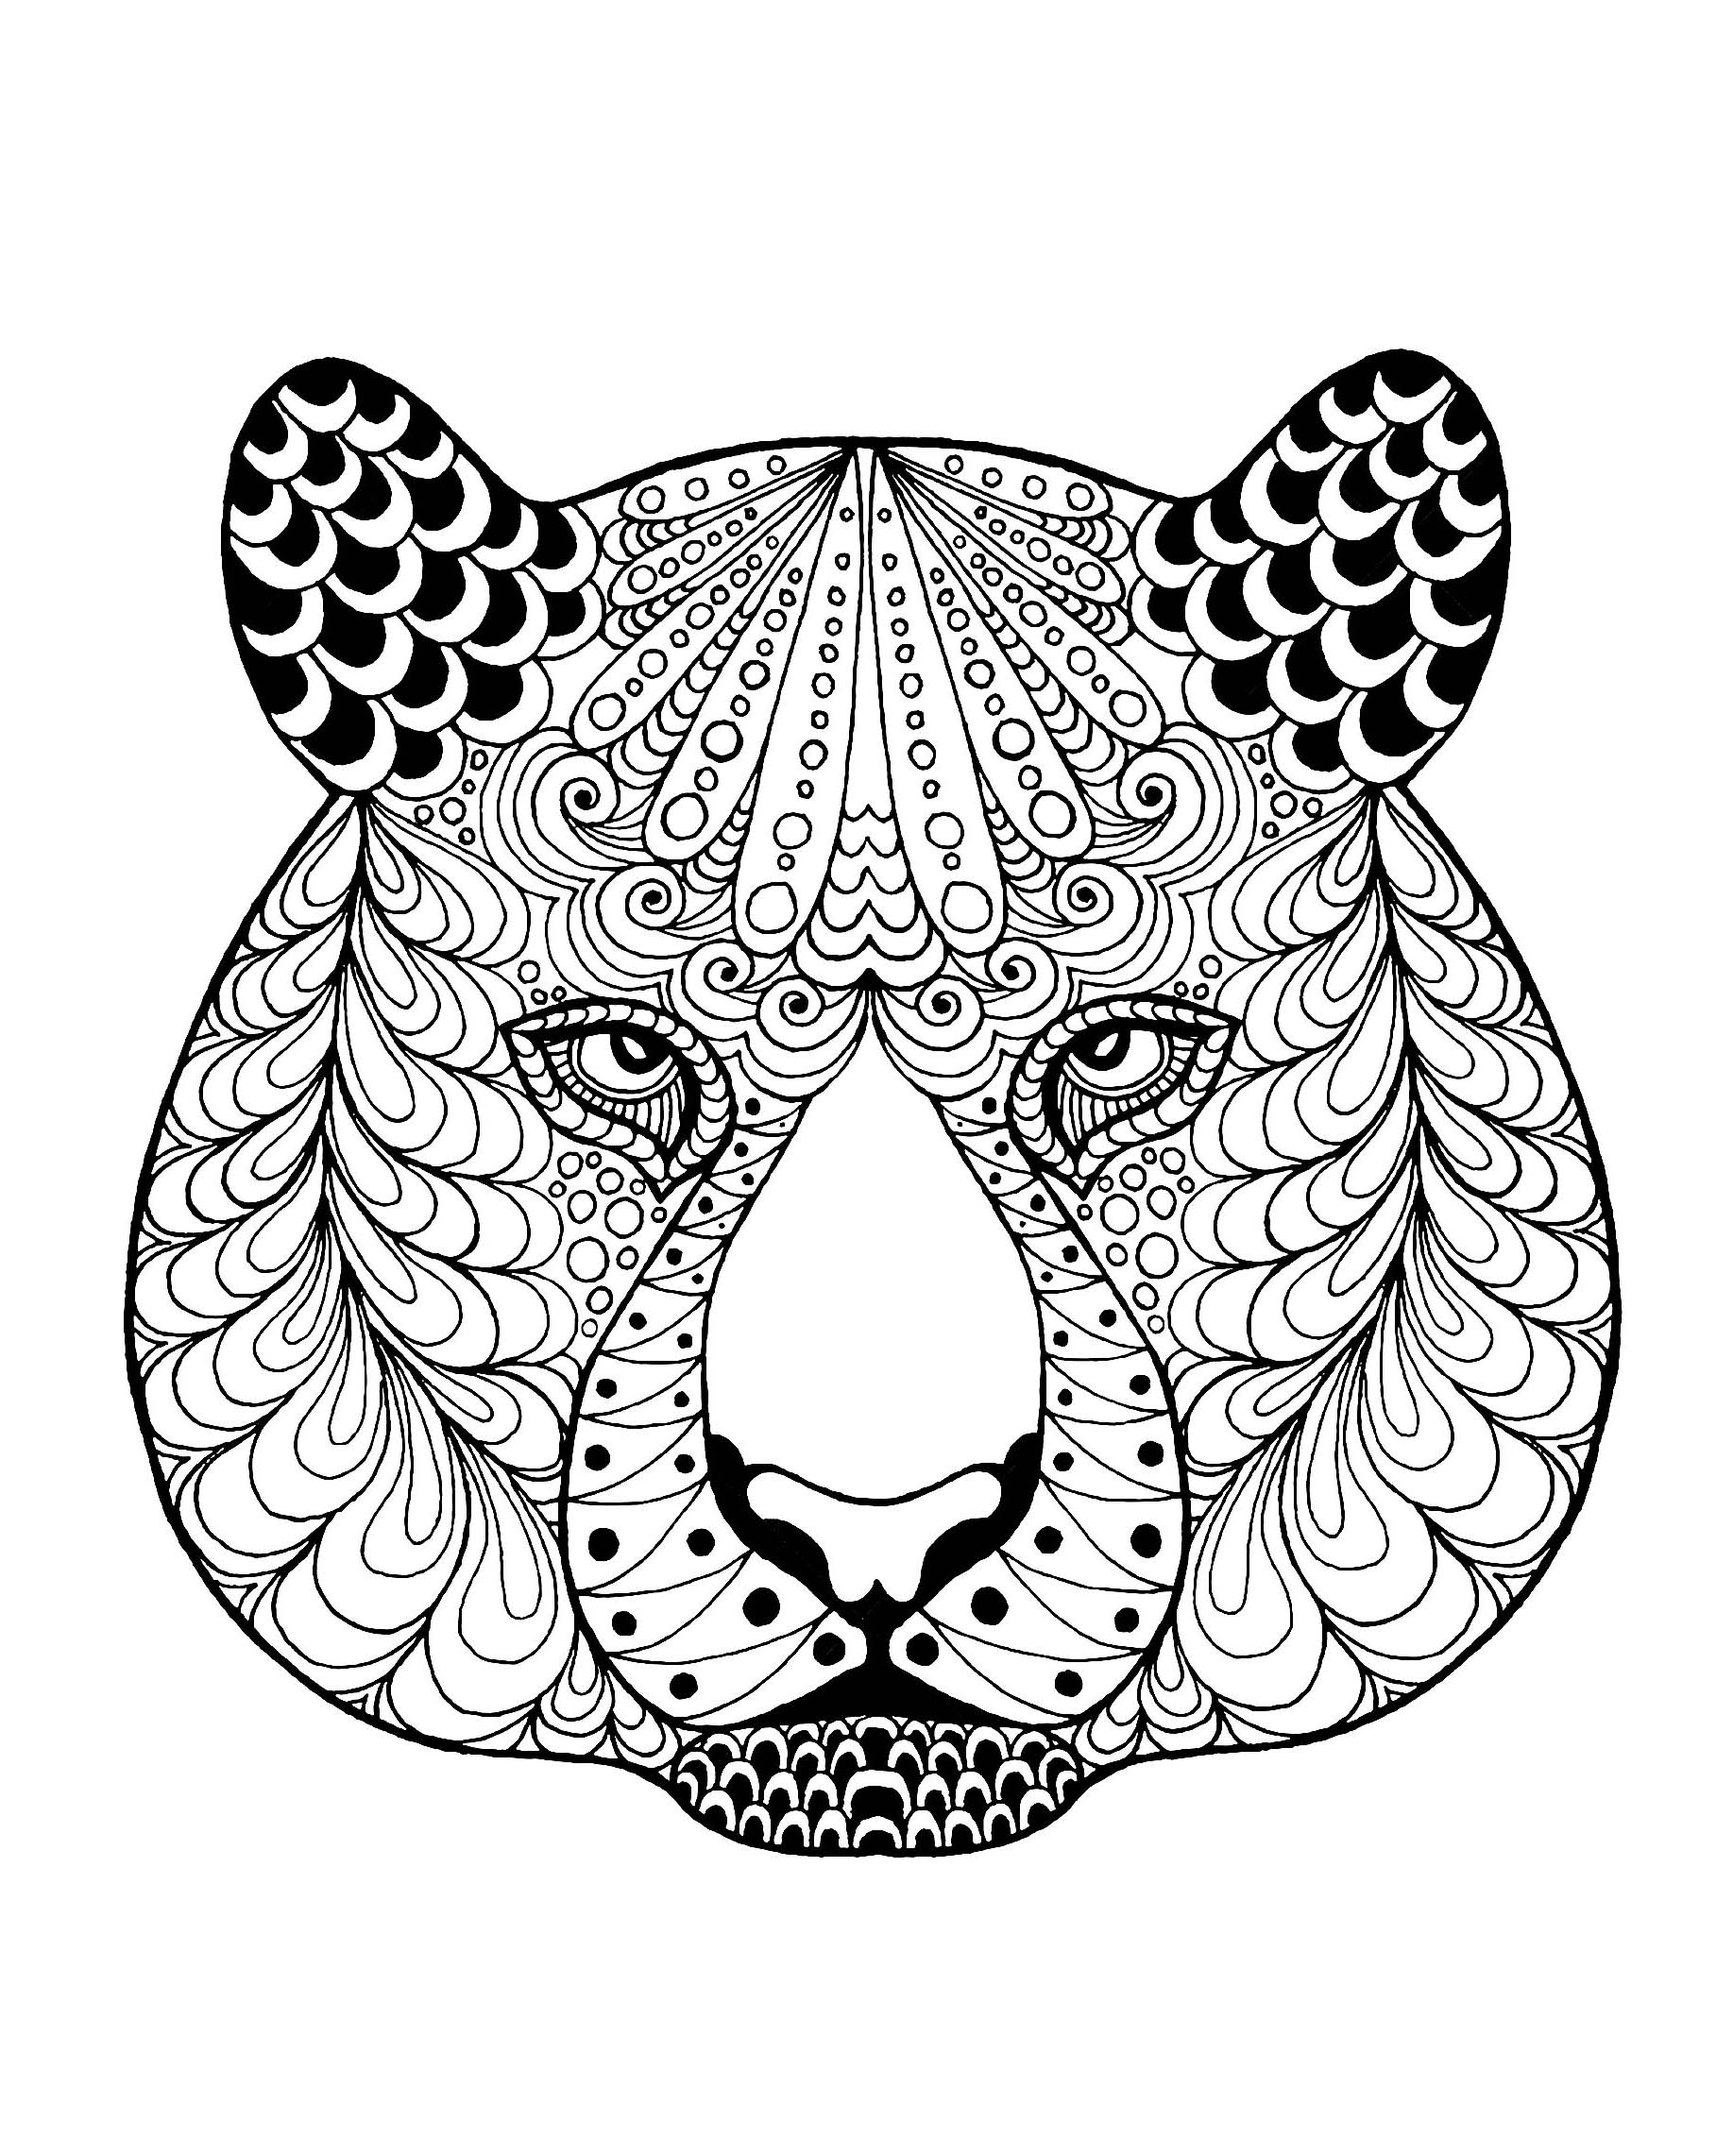 Cabeça de tigre para colorir, Artista : Safiullina   Fonte : 123rf